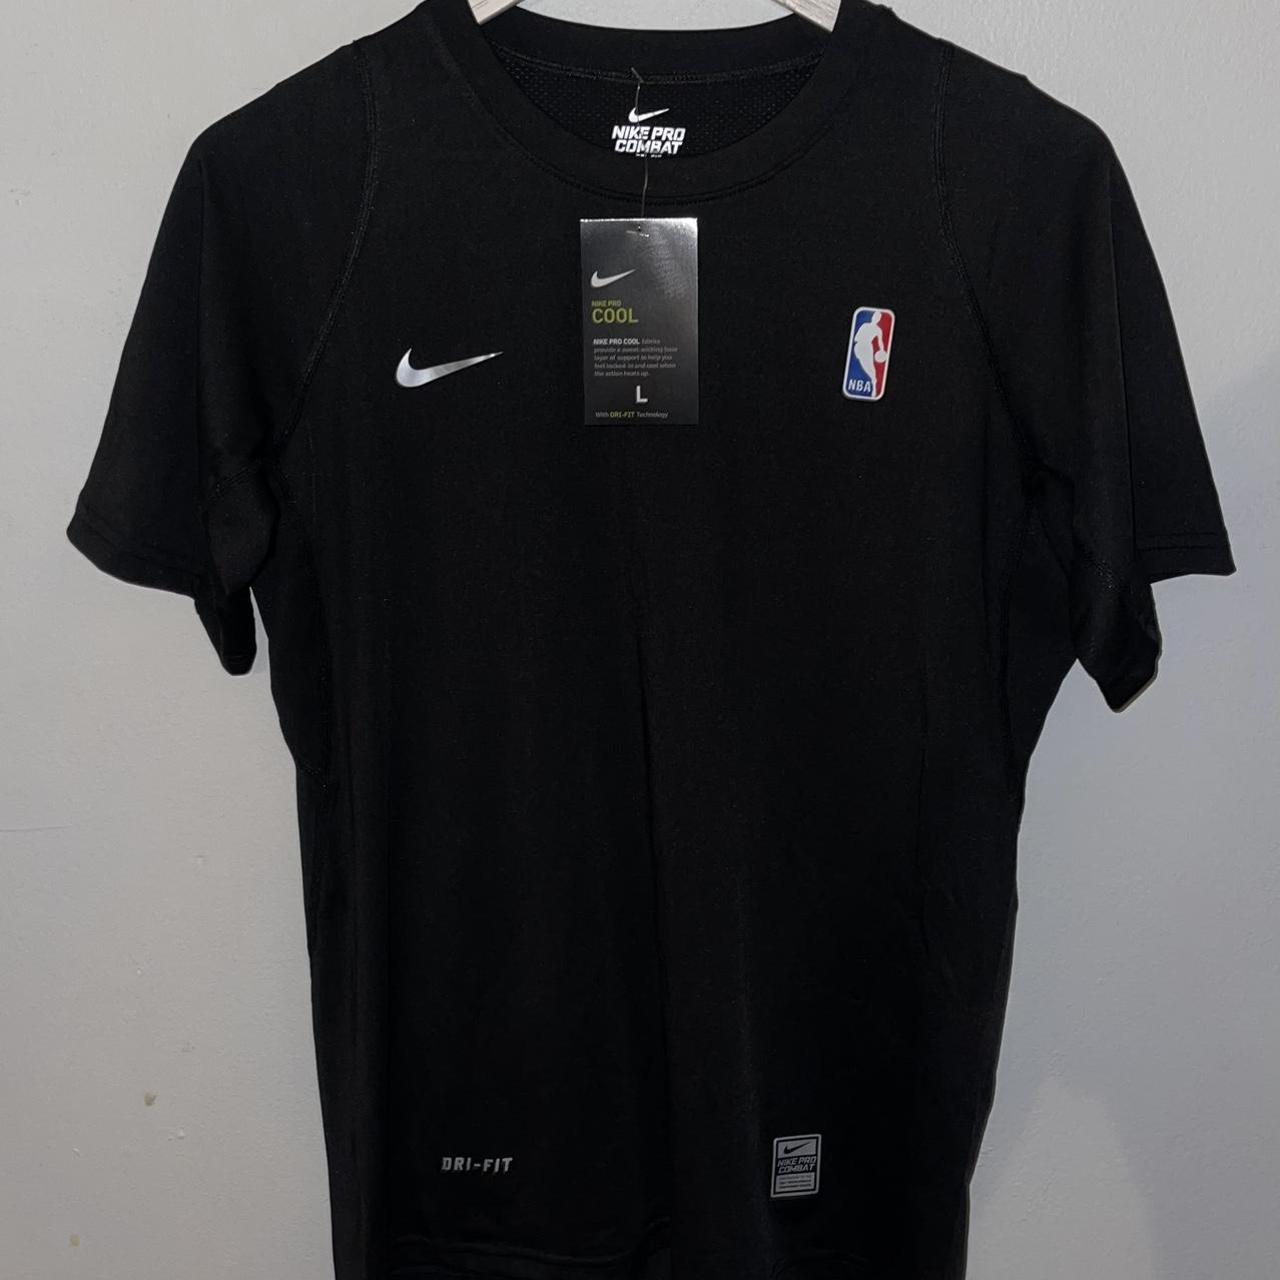 PLAYER ISSUED* NIKE Pro Combat NBA COMPRESSION TANK Mens XL basketball shirt  $99.99 - PicClick